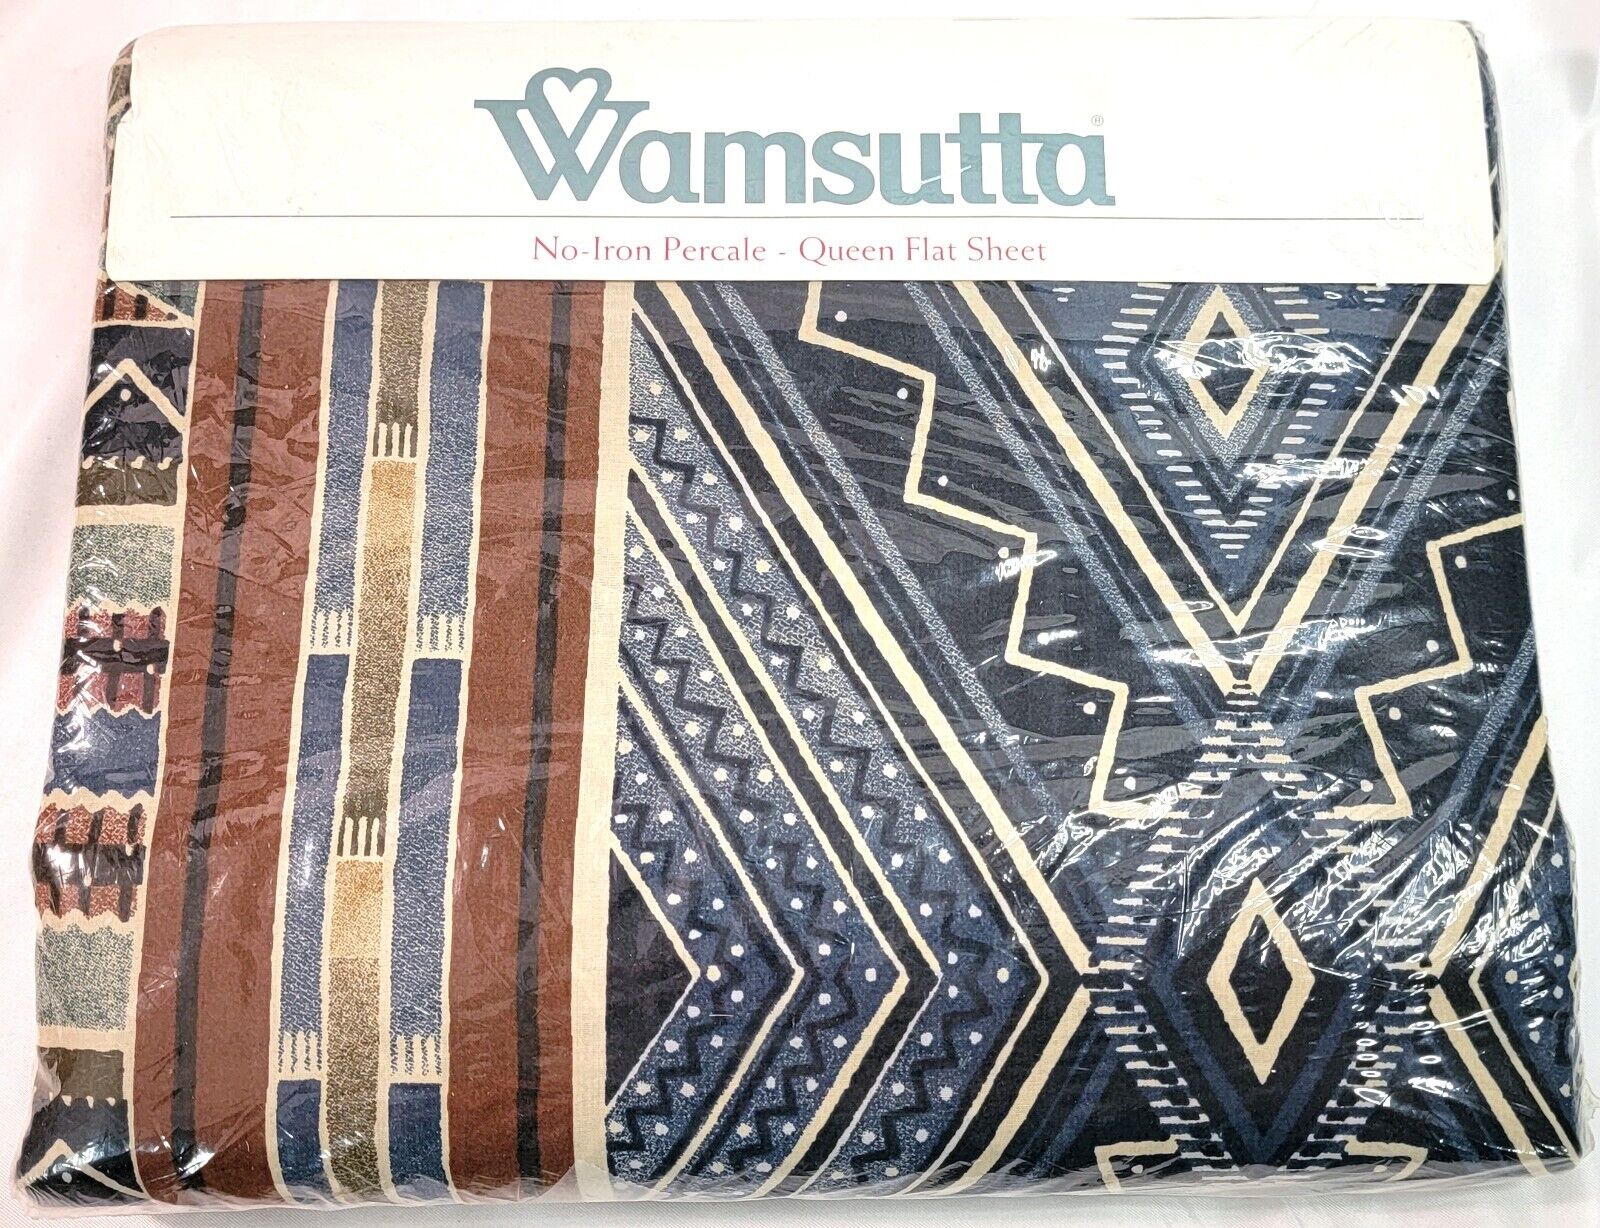 Vtg New Wamsutta Queen Flat Sheet No-Iron Percale 90x102 Riverton Blue Sealed